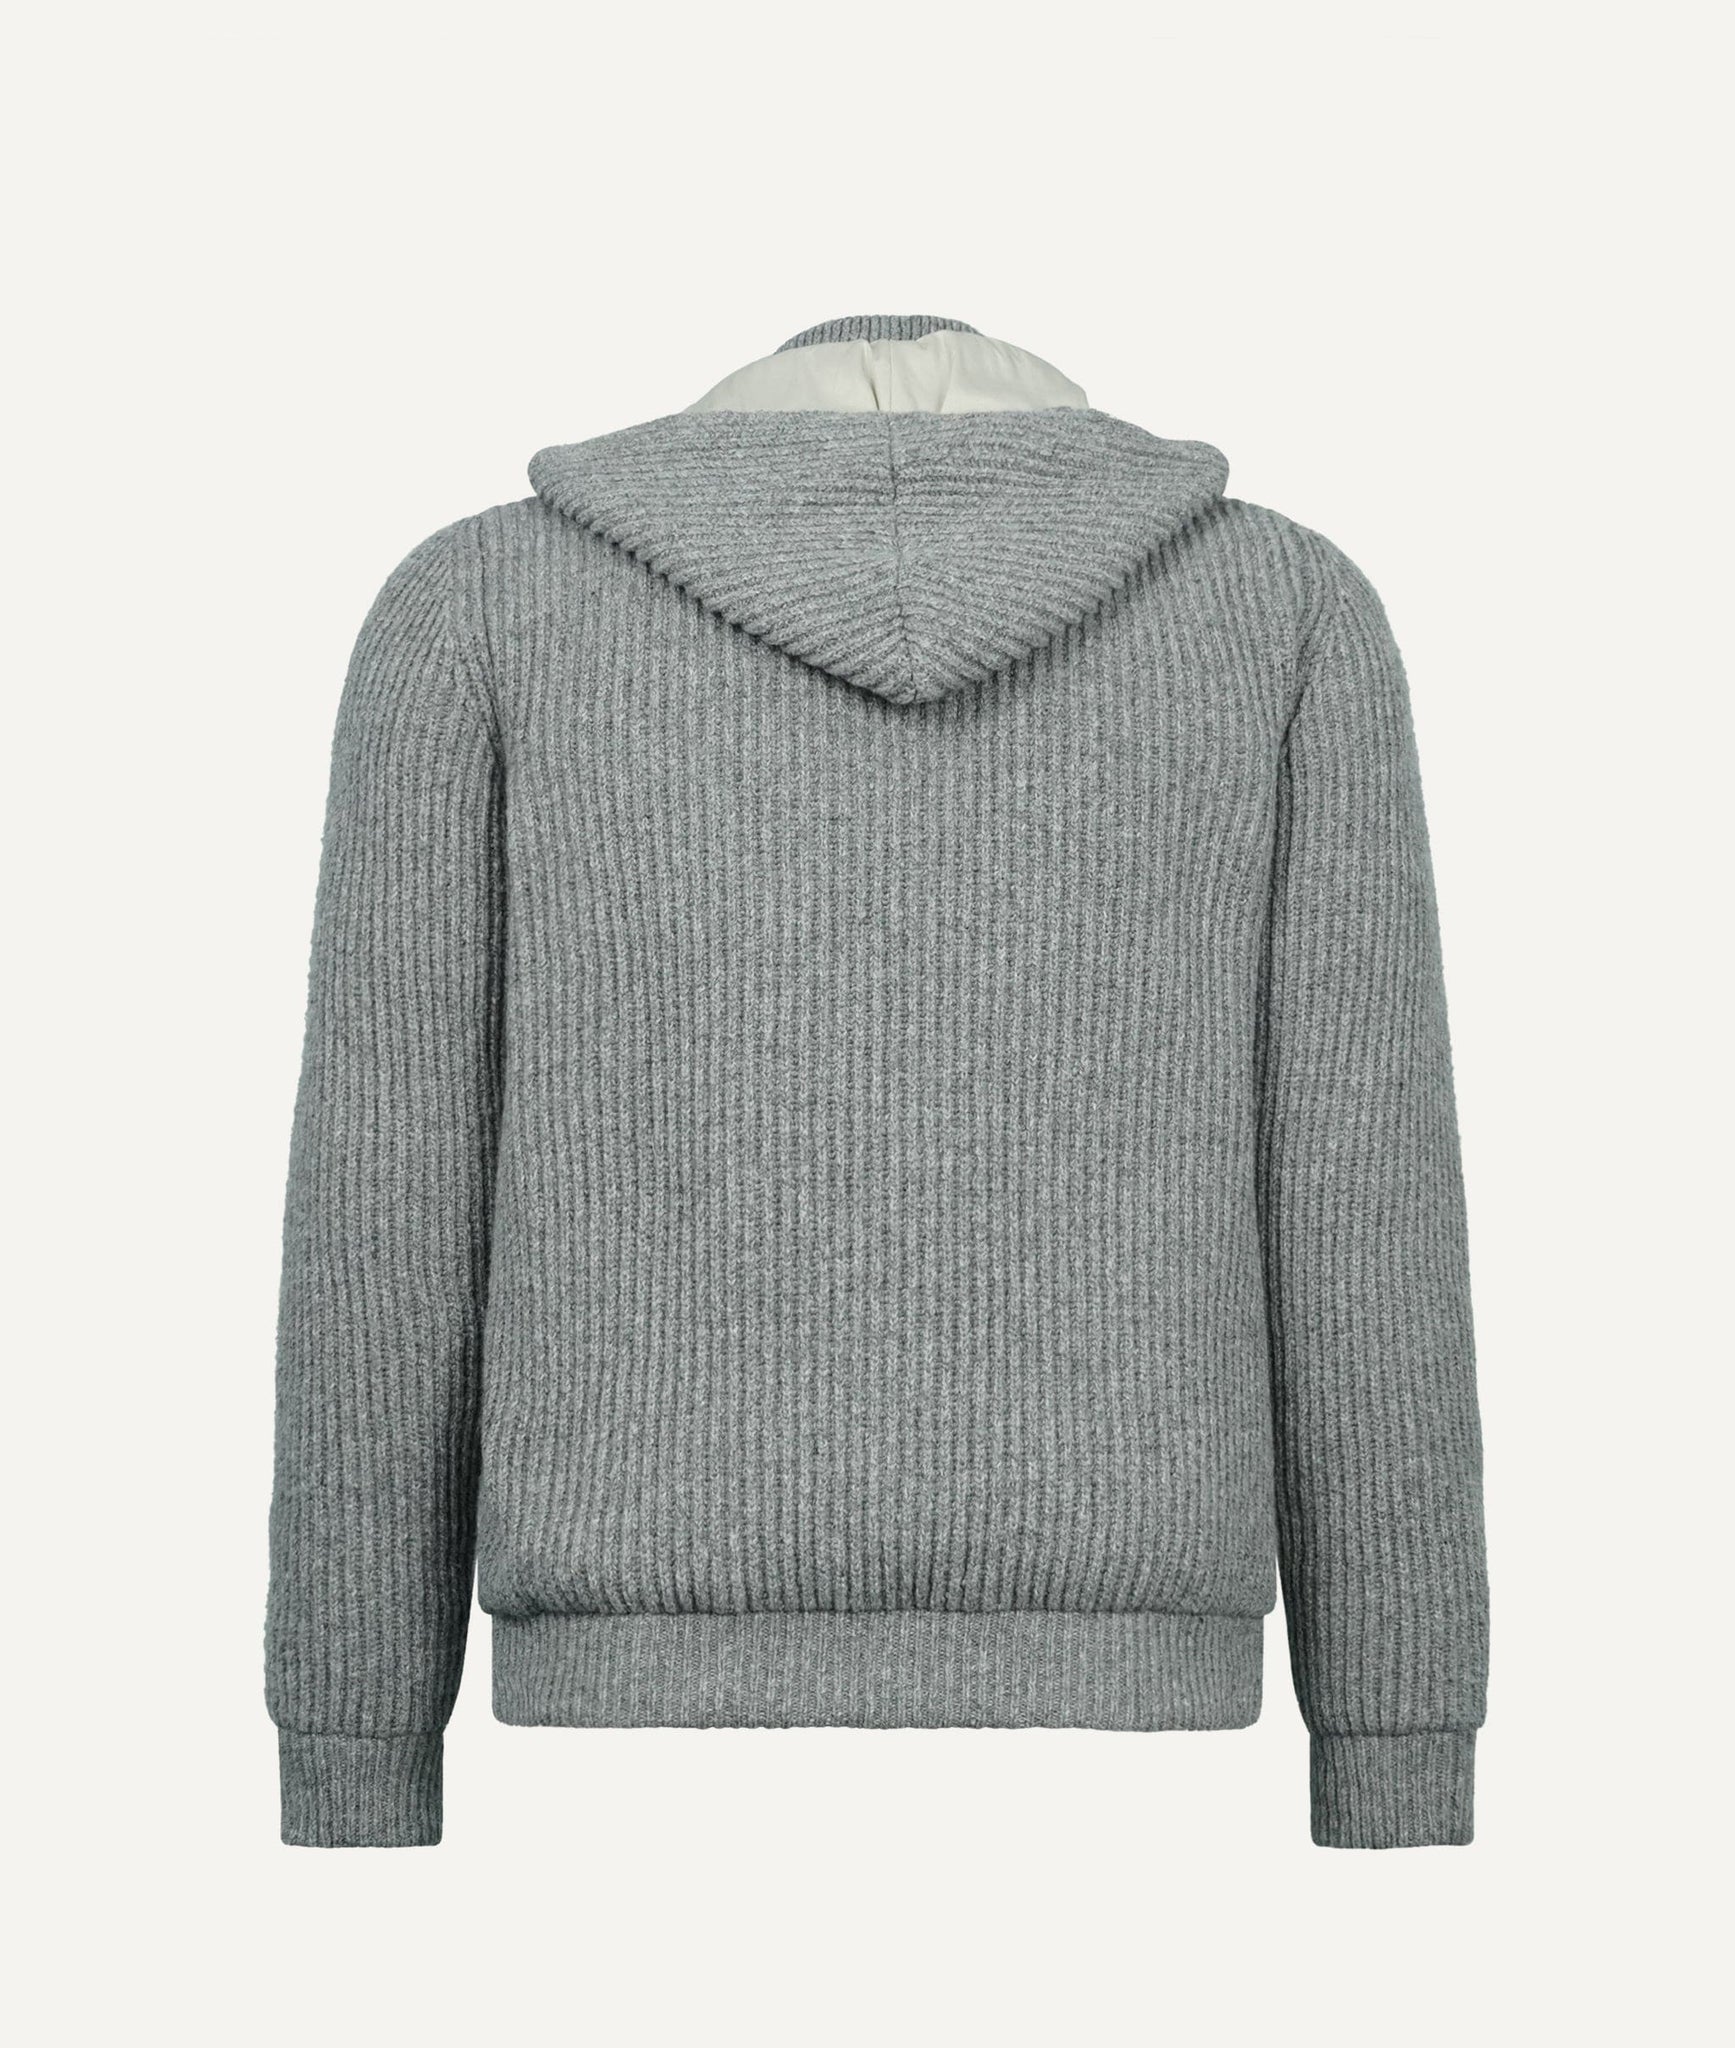 Eleventy - Sweatshirt with Hood in Wool & Cashmere